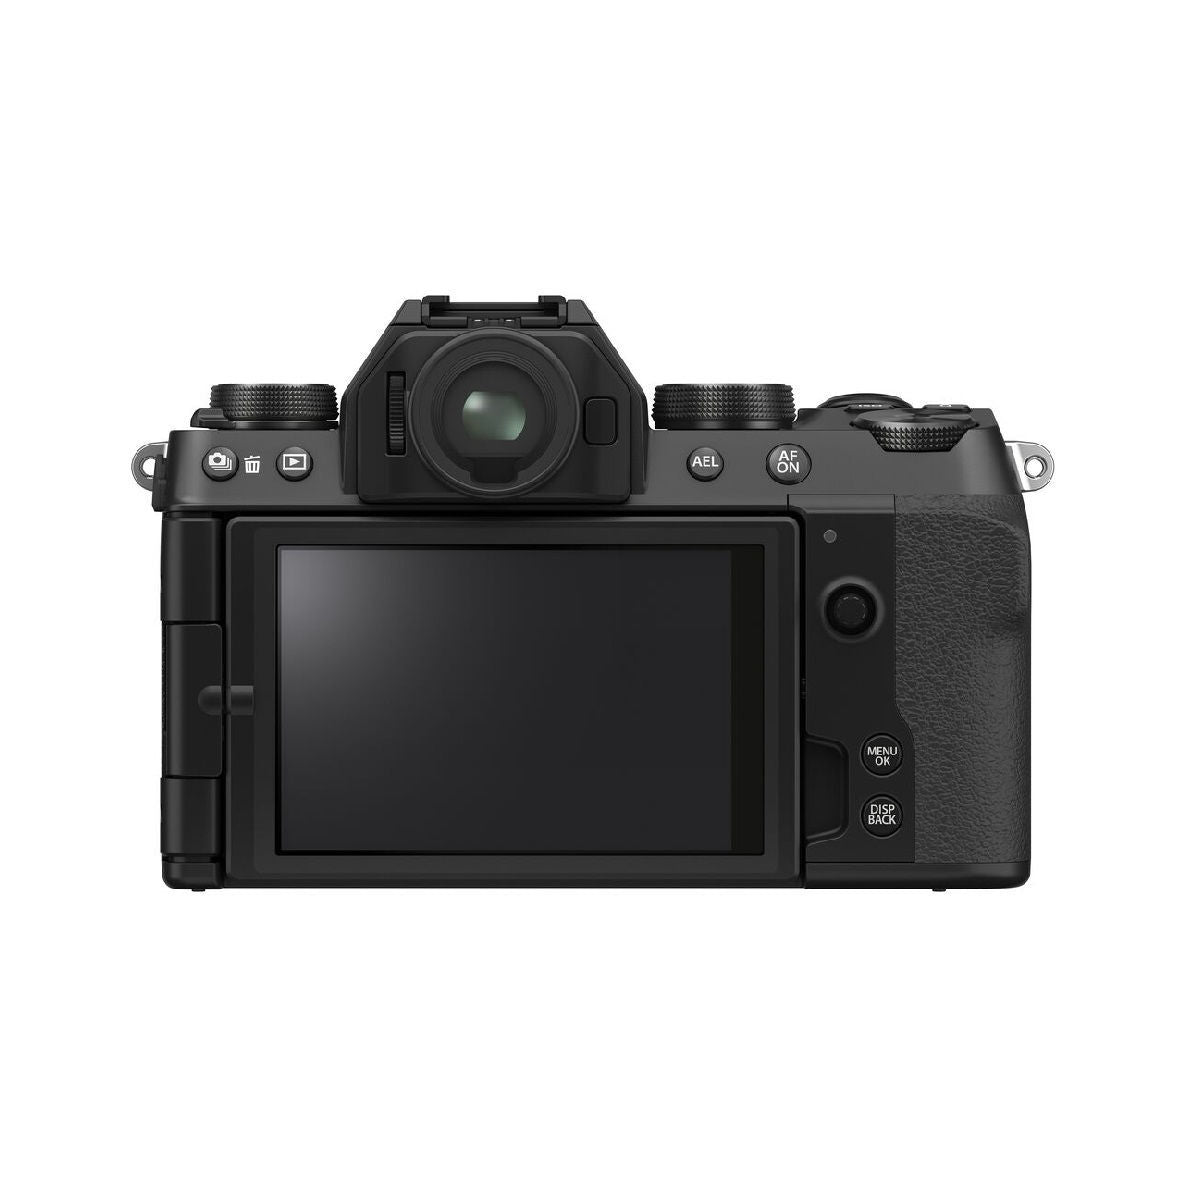 Fujifilm X S10 Mirrorless Digital Camera With 16 80mm Lens